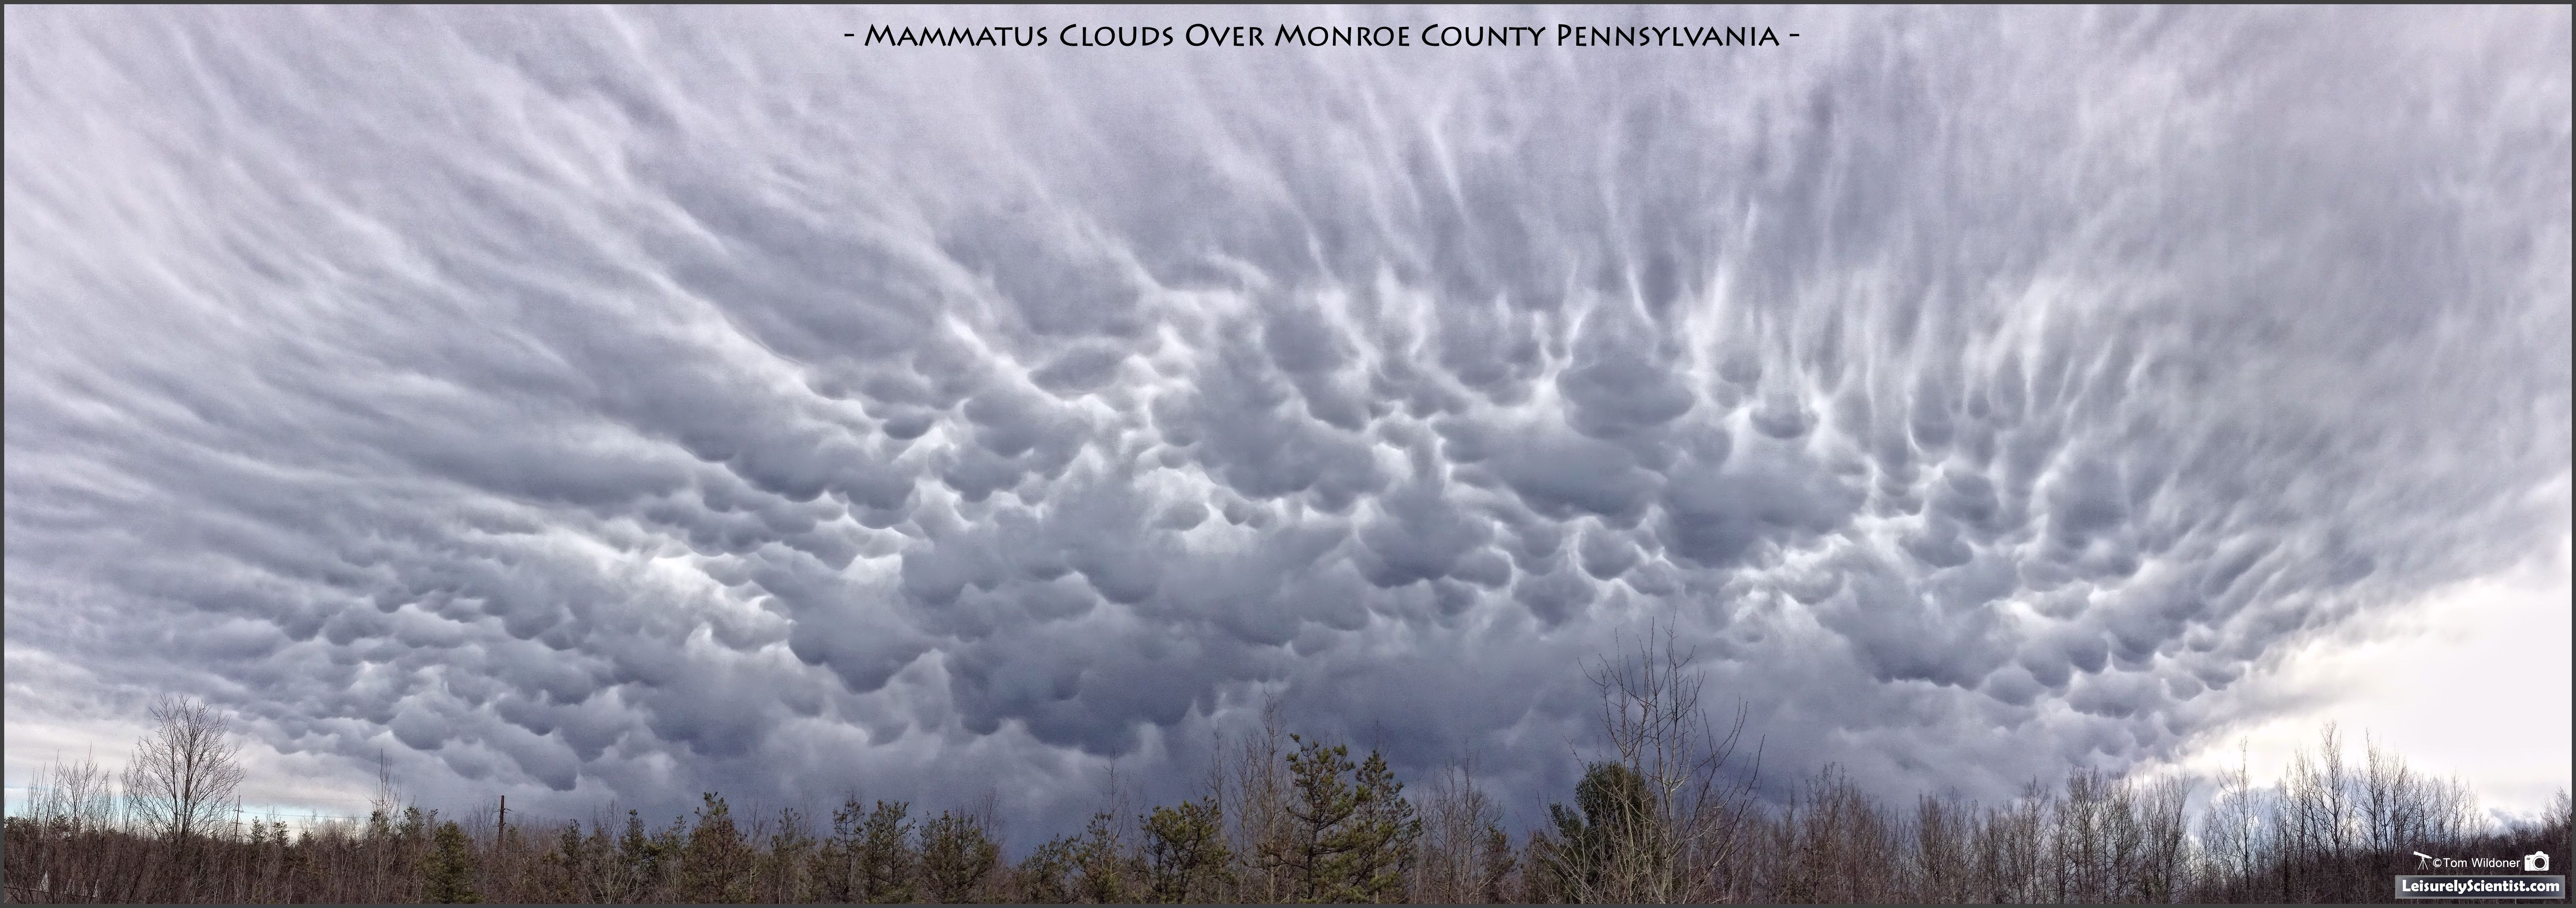 Mammatus Clouds Over Tobyhanna, Pennsylvania - EPOD - a service of USRA